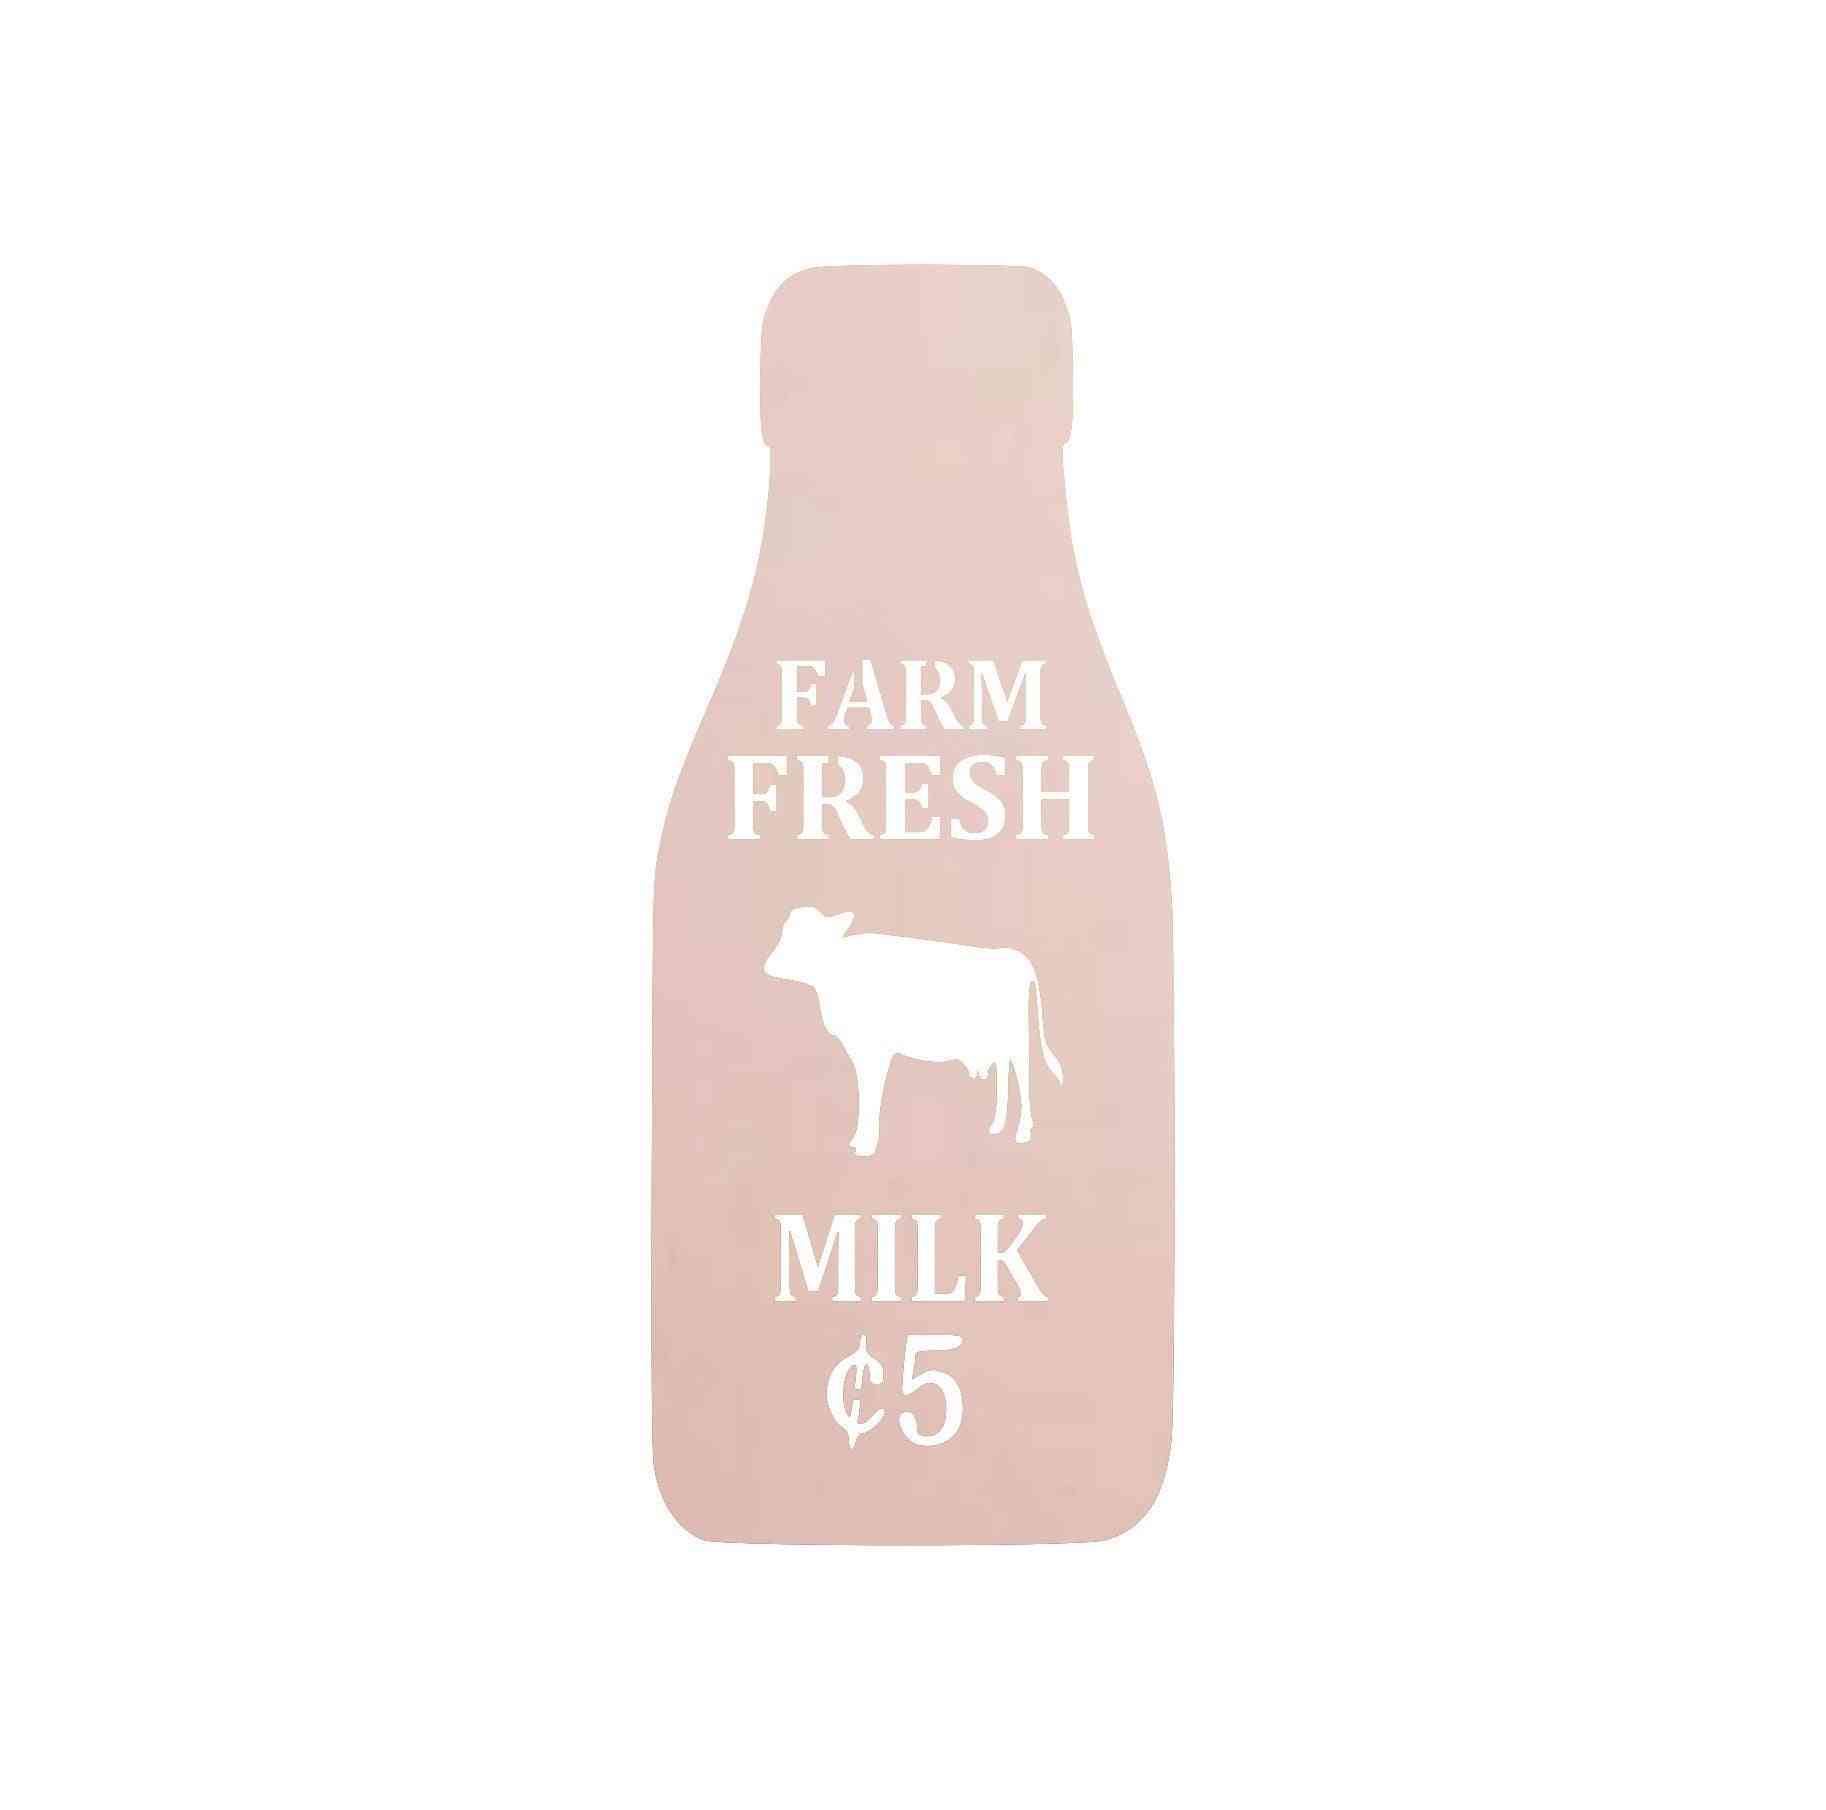 Cartel de arte de metal de leche fresca de granja